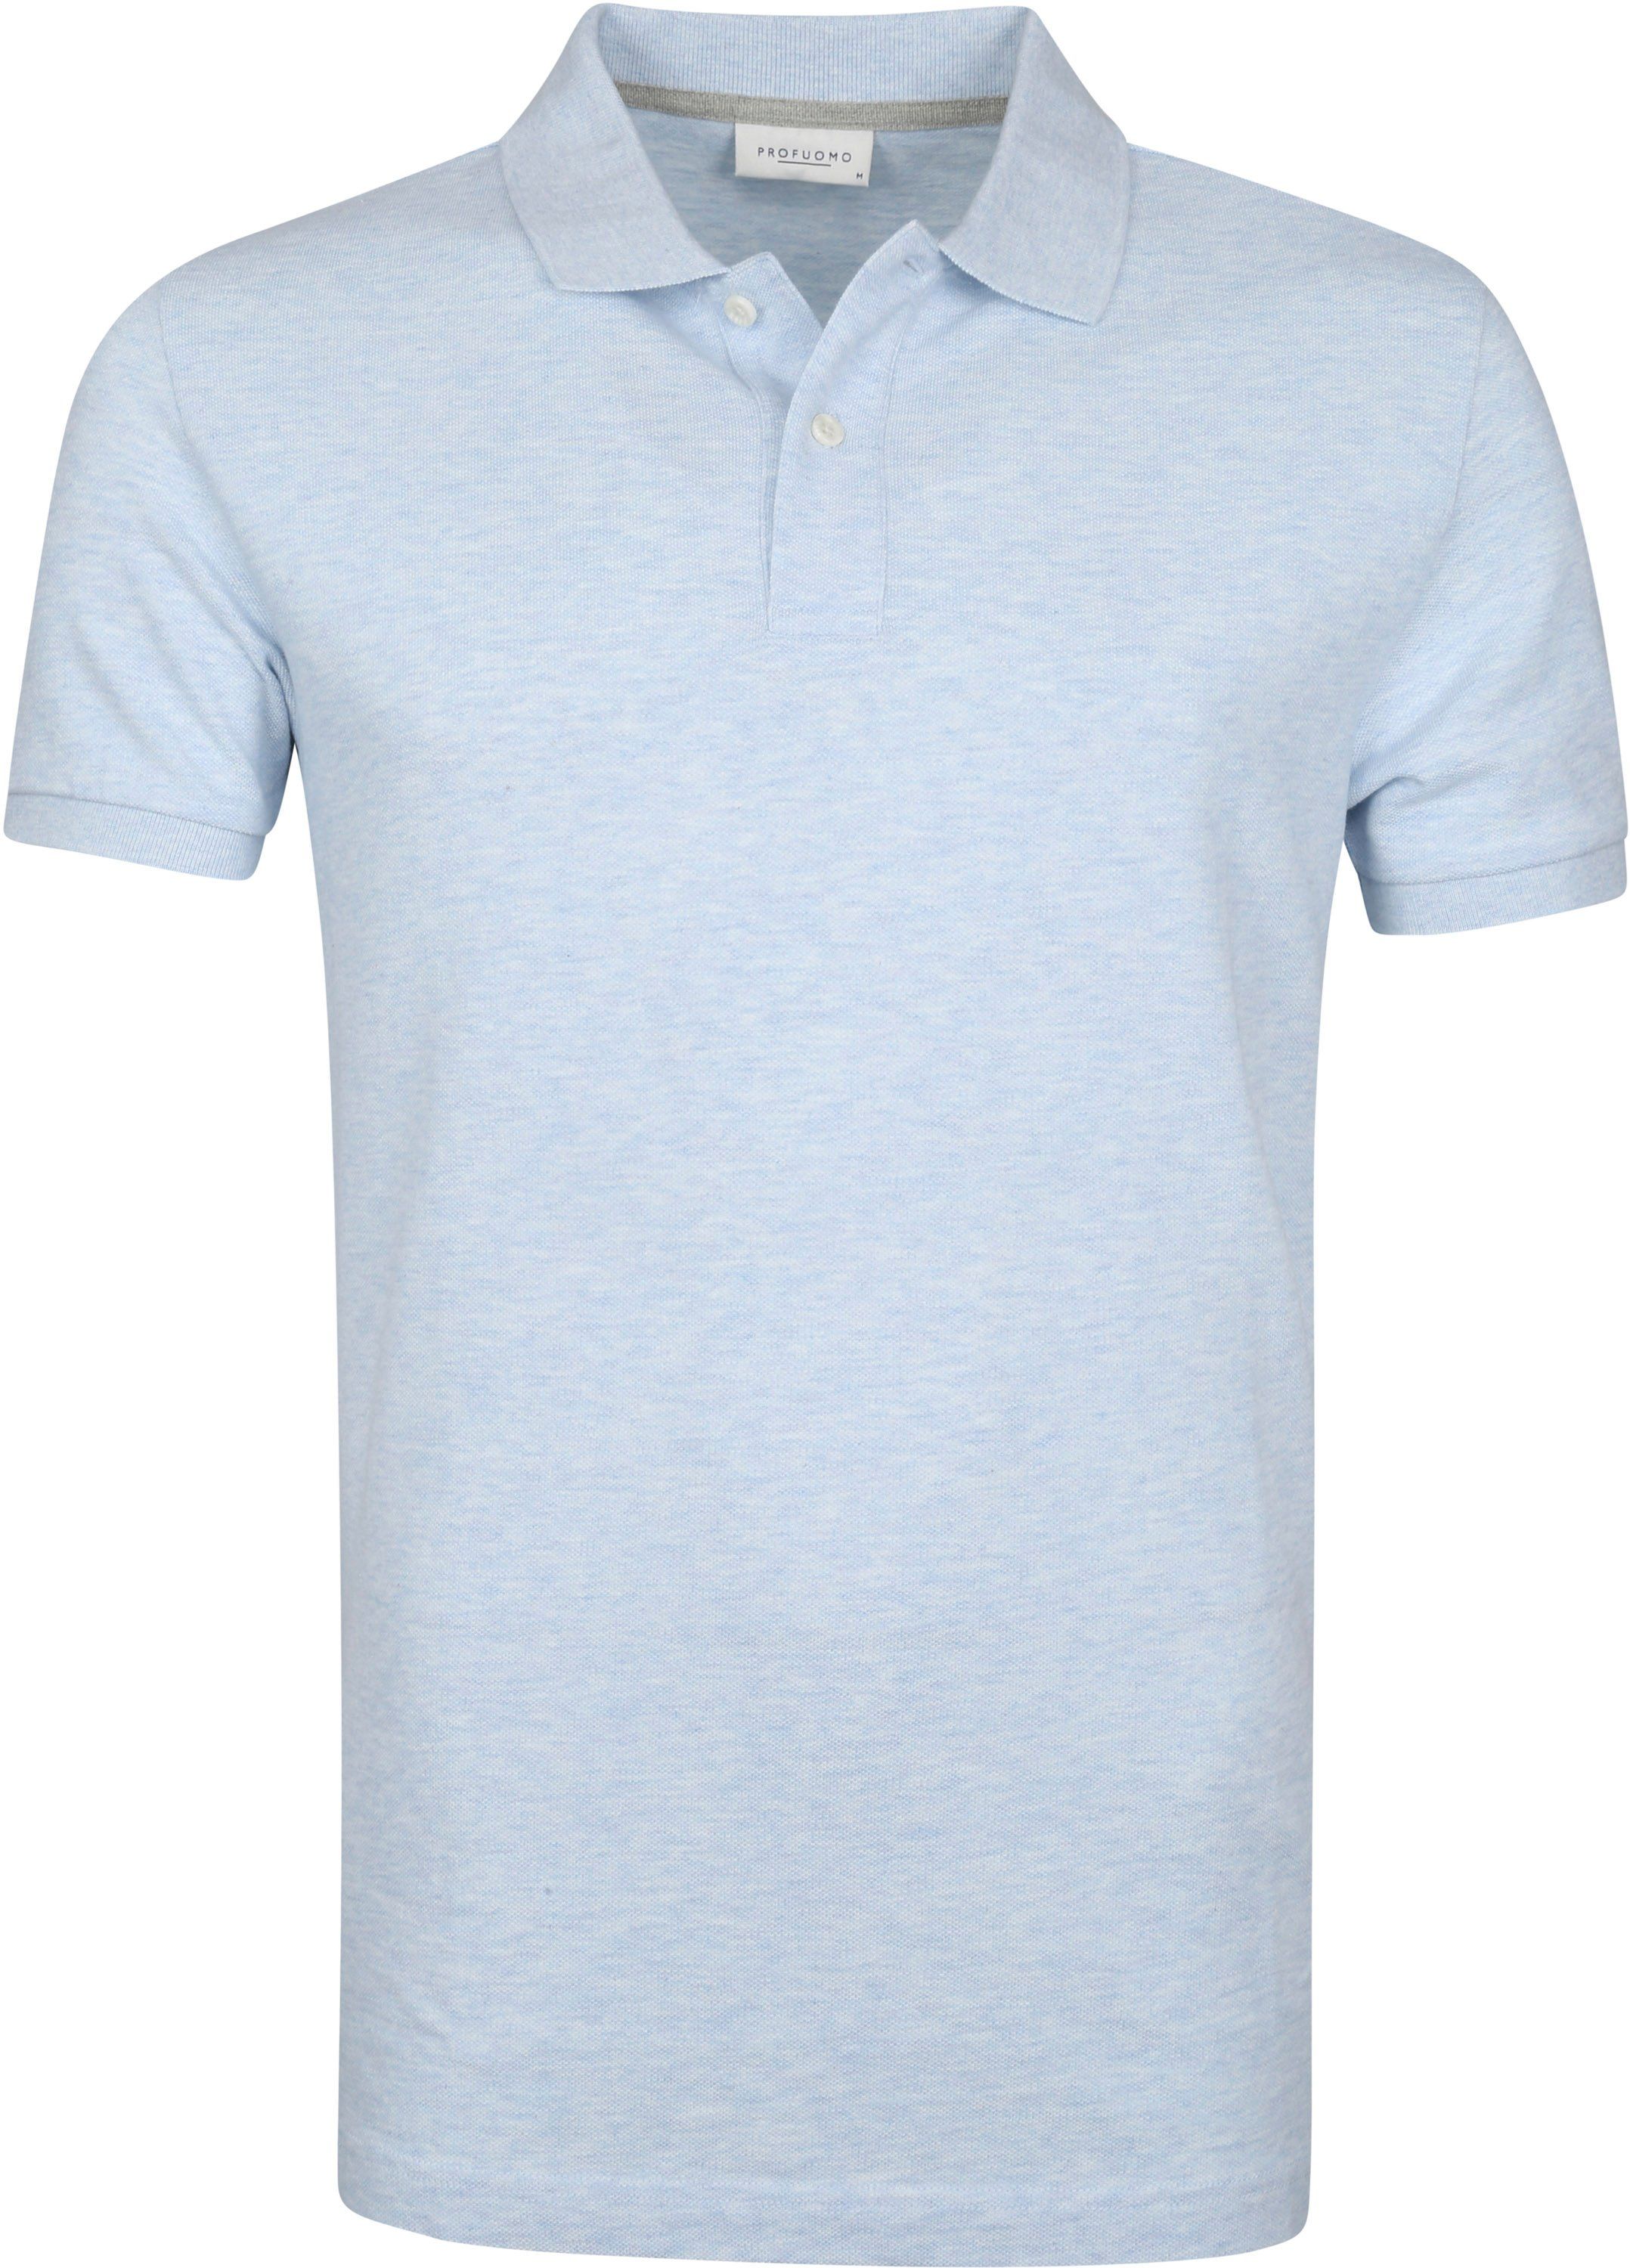 Profuomo Pique Polo Shirt Light Melange Blue size L